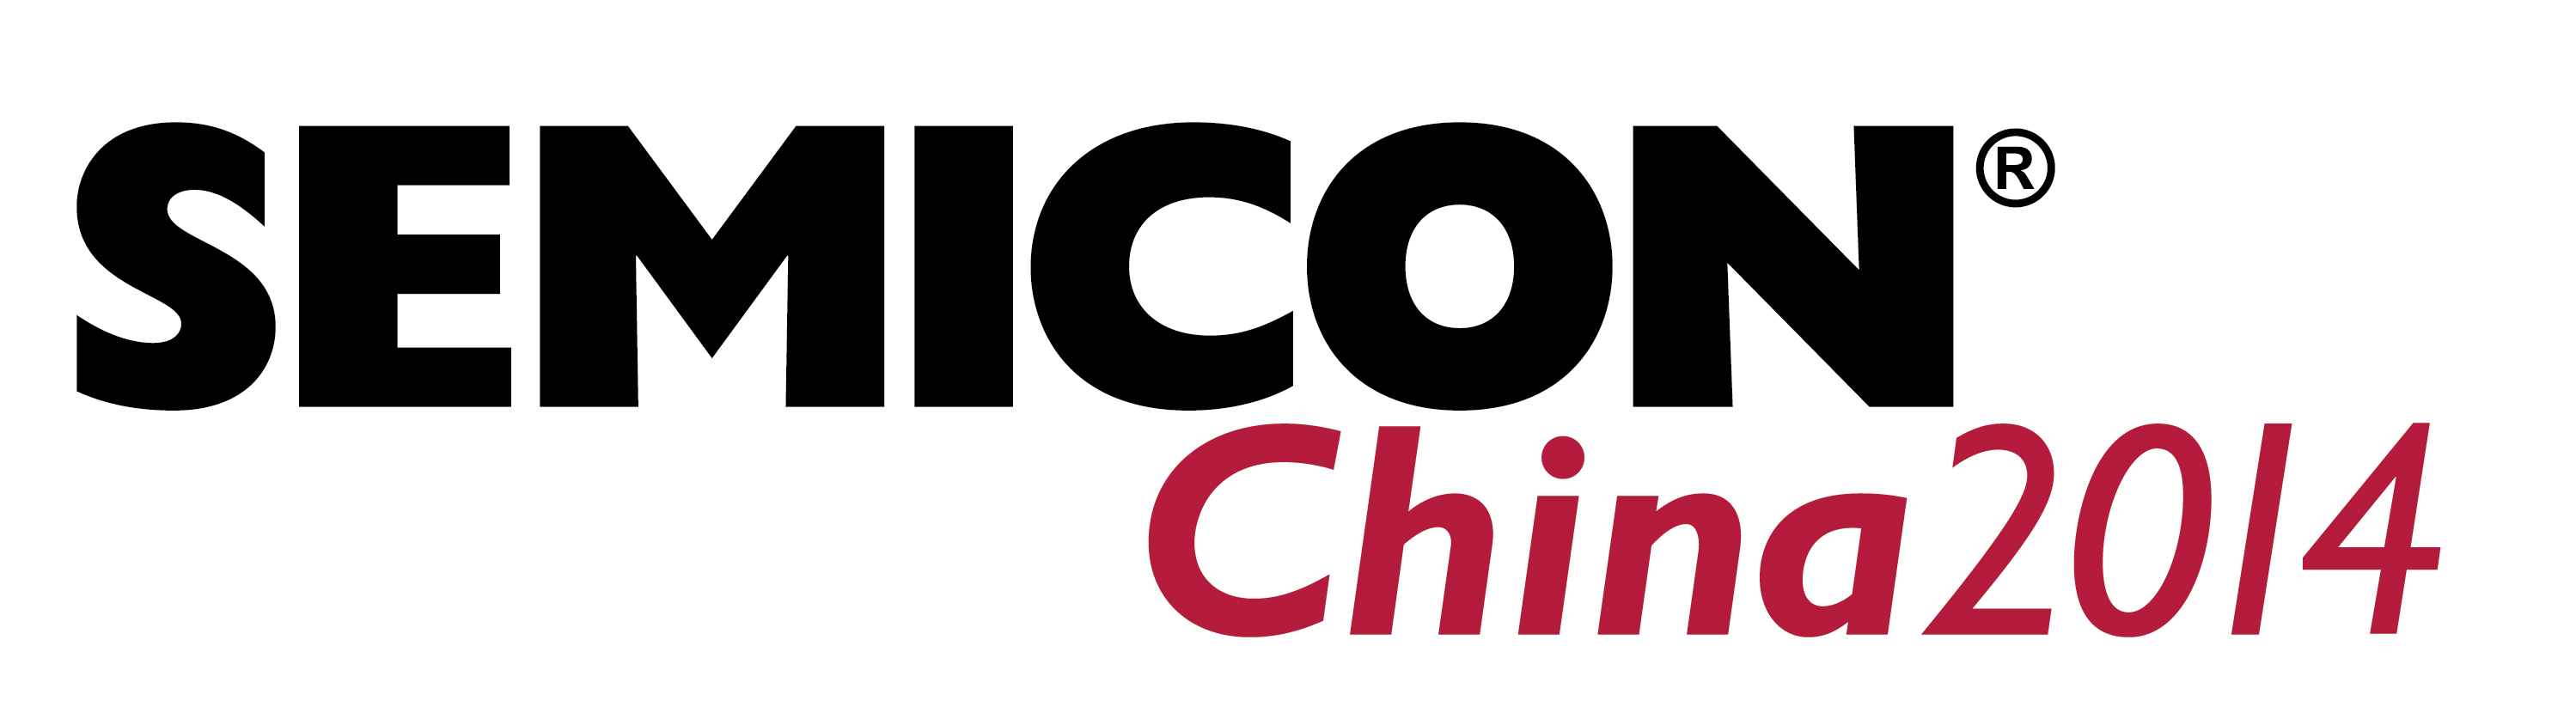 SEMICON China 2014